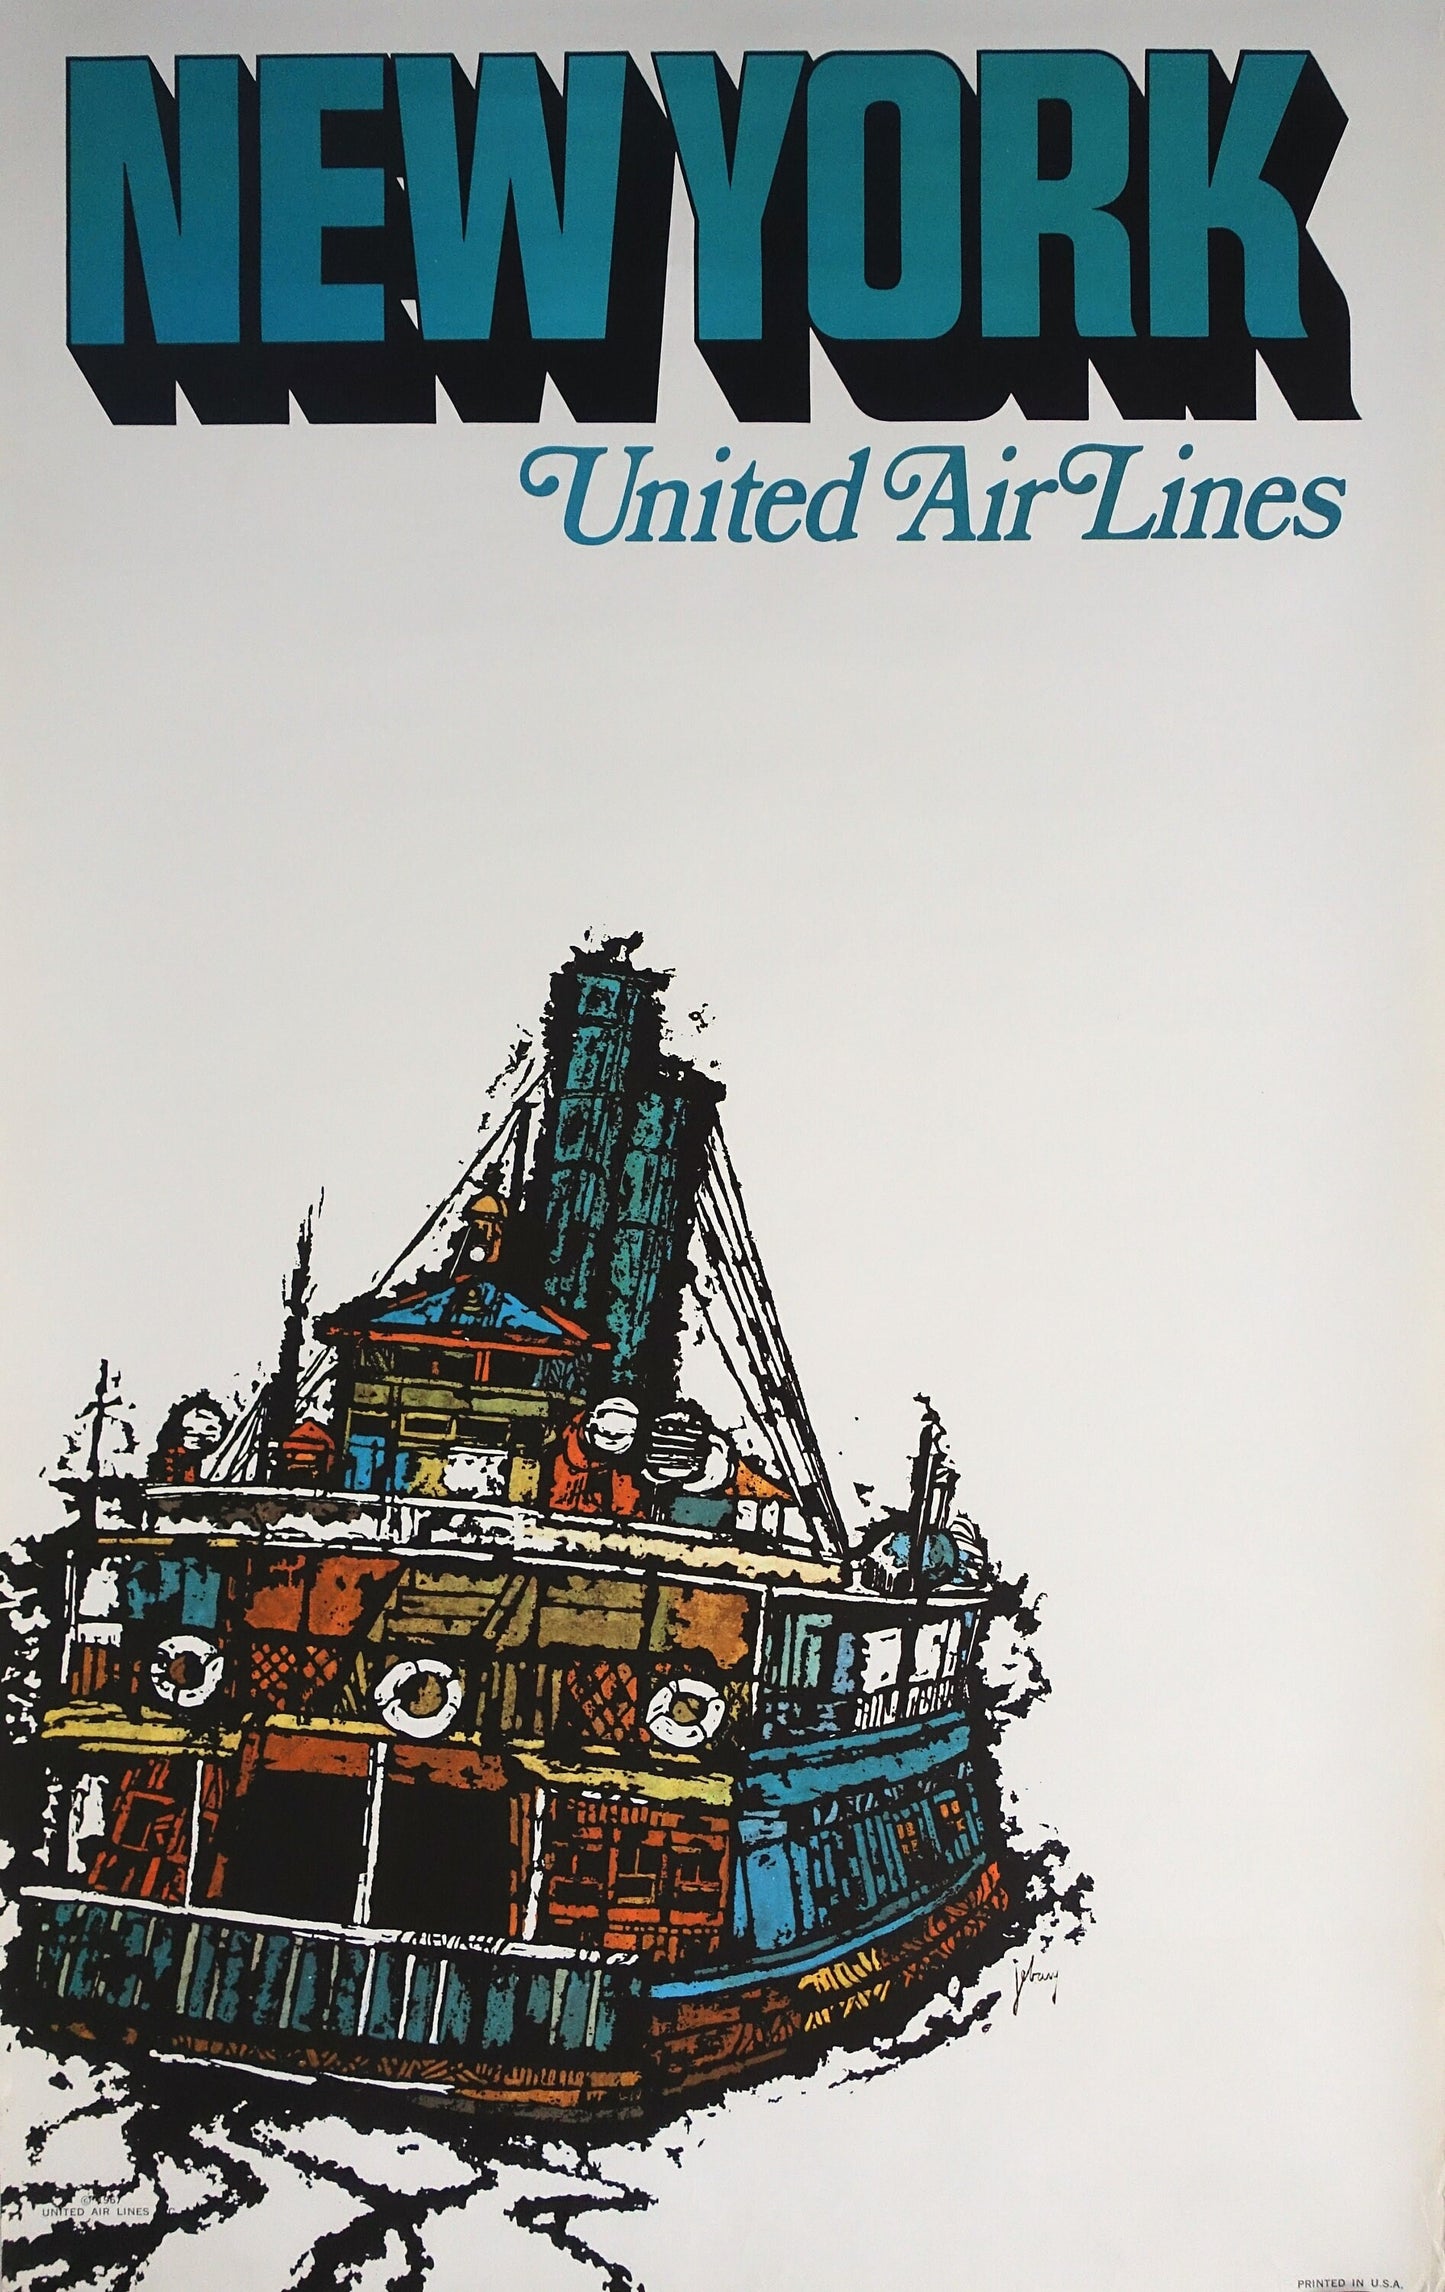 1967 New York United Airlines by James Jebavy - Original Vintage Poster